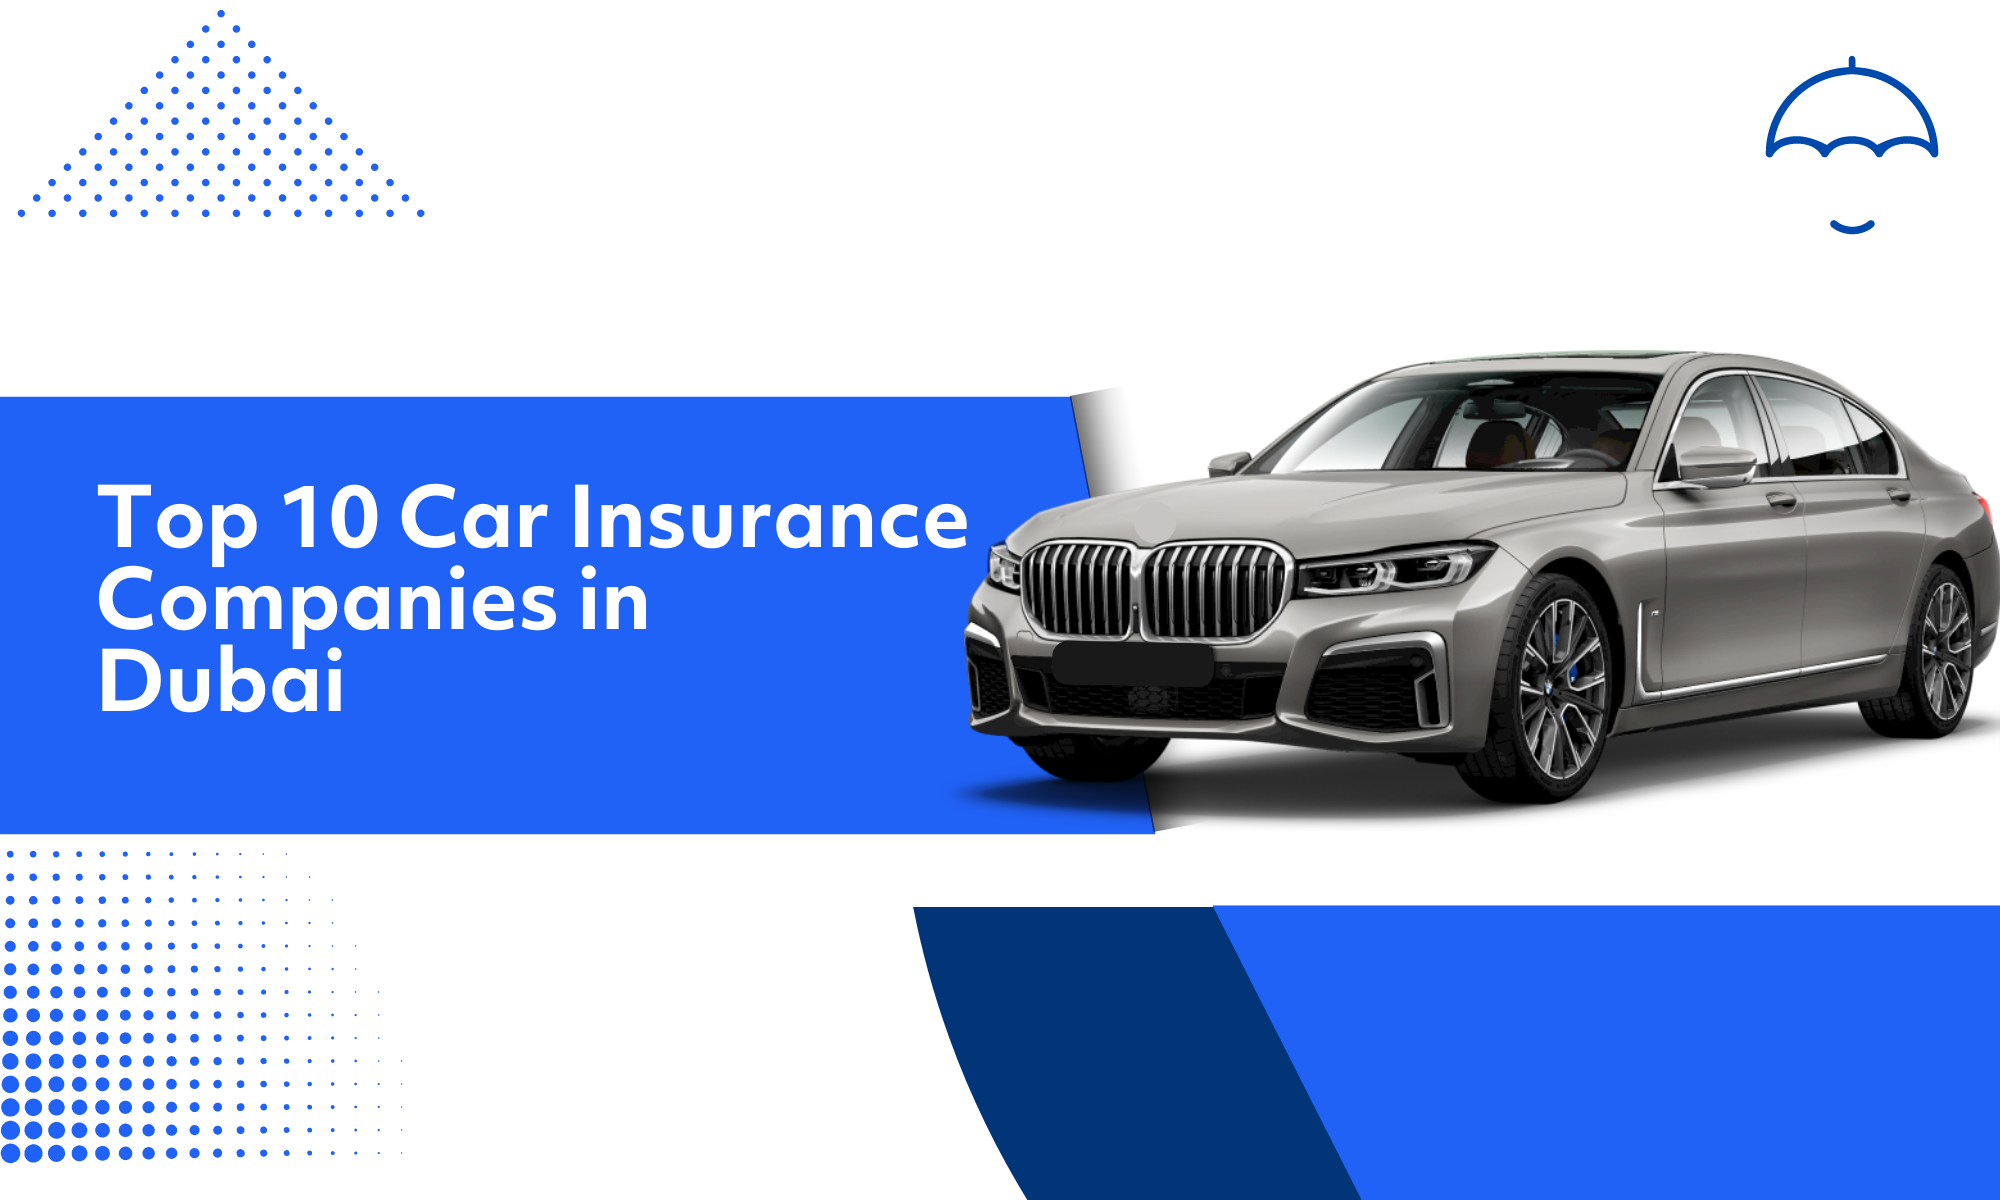 Top 10 car insurance companies in Dubai